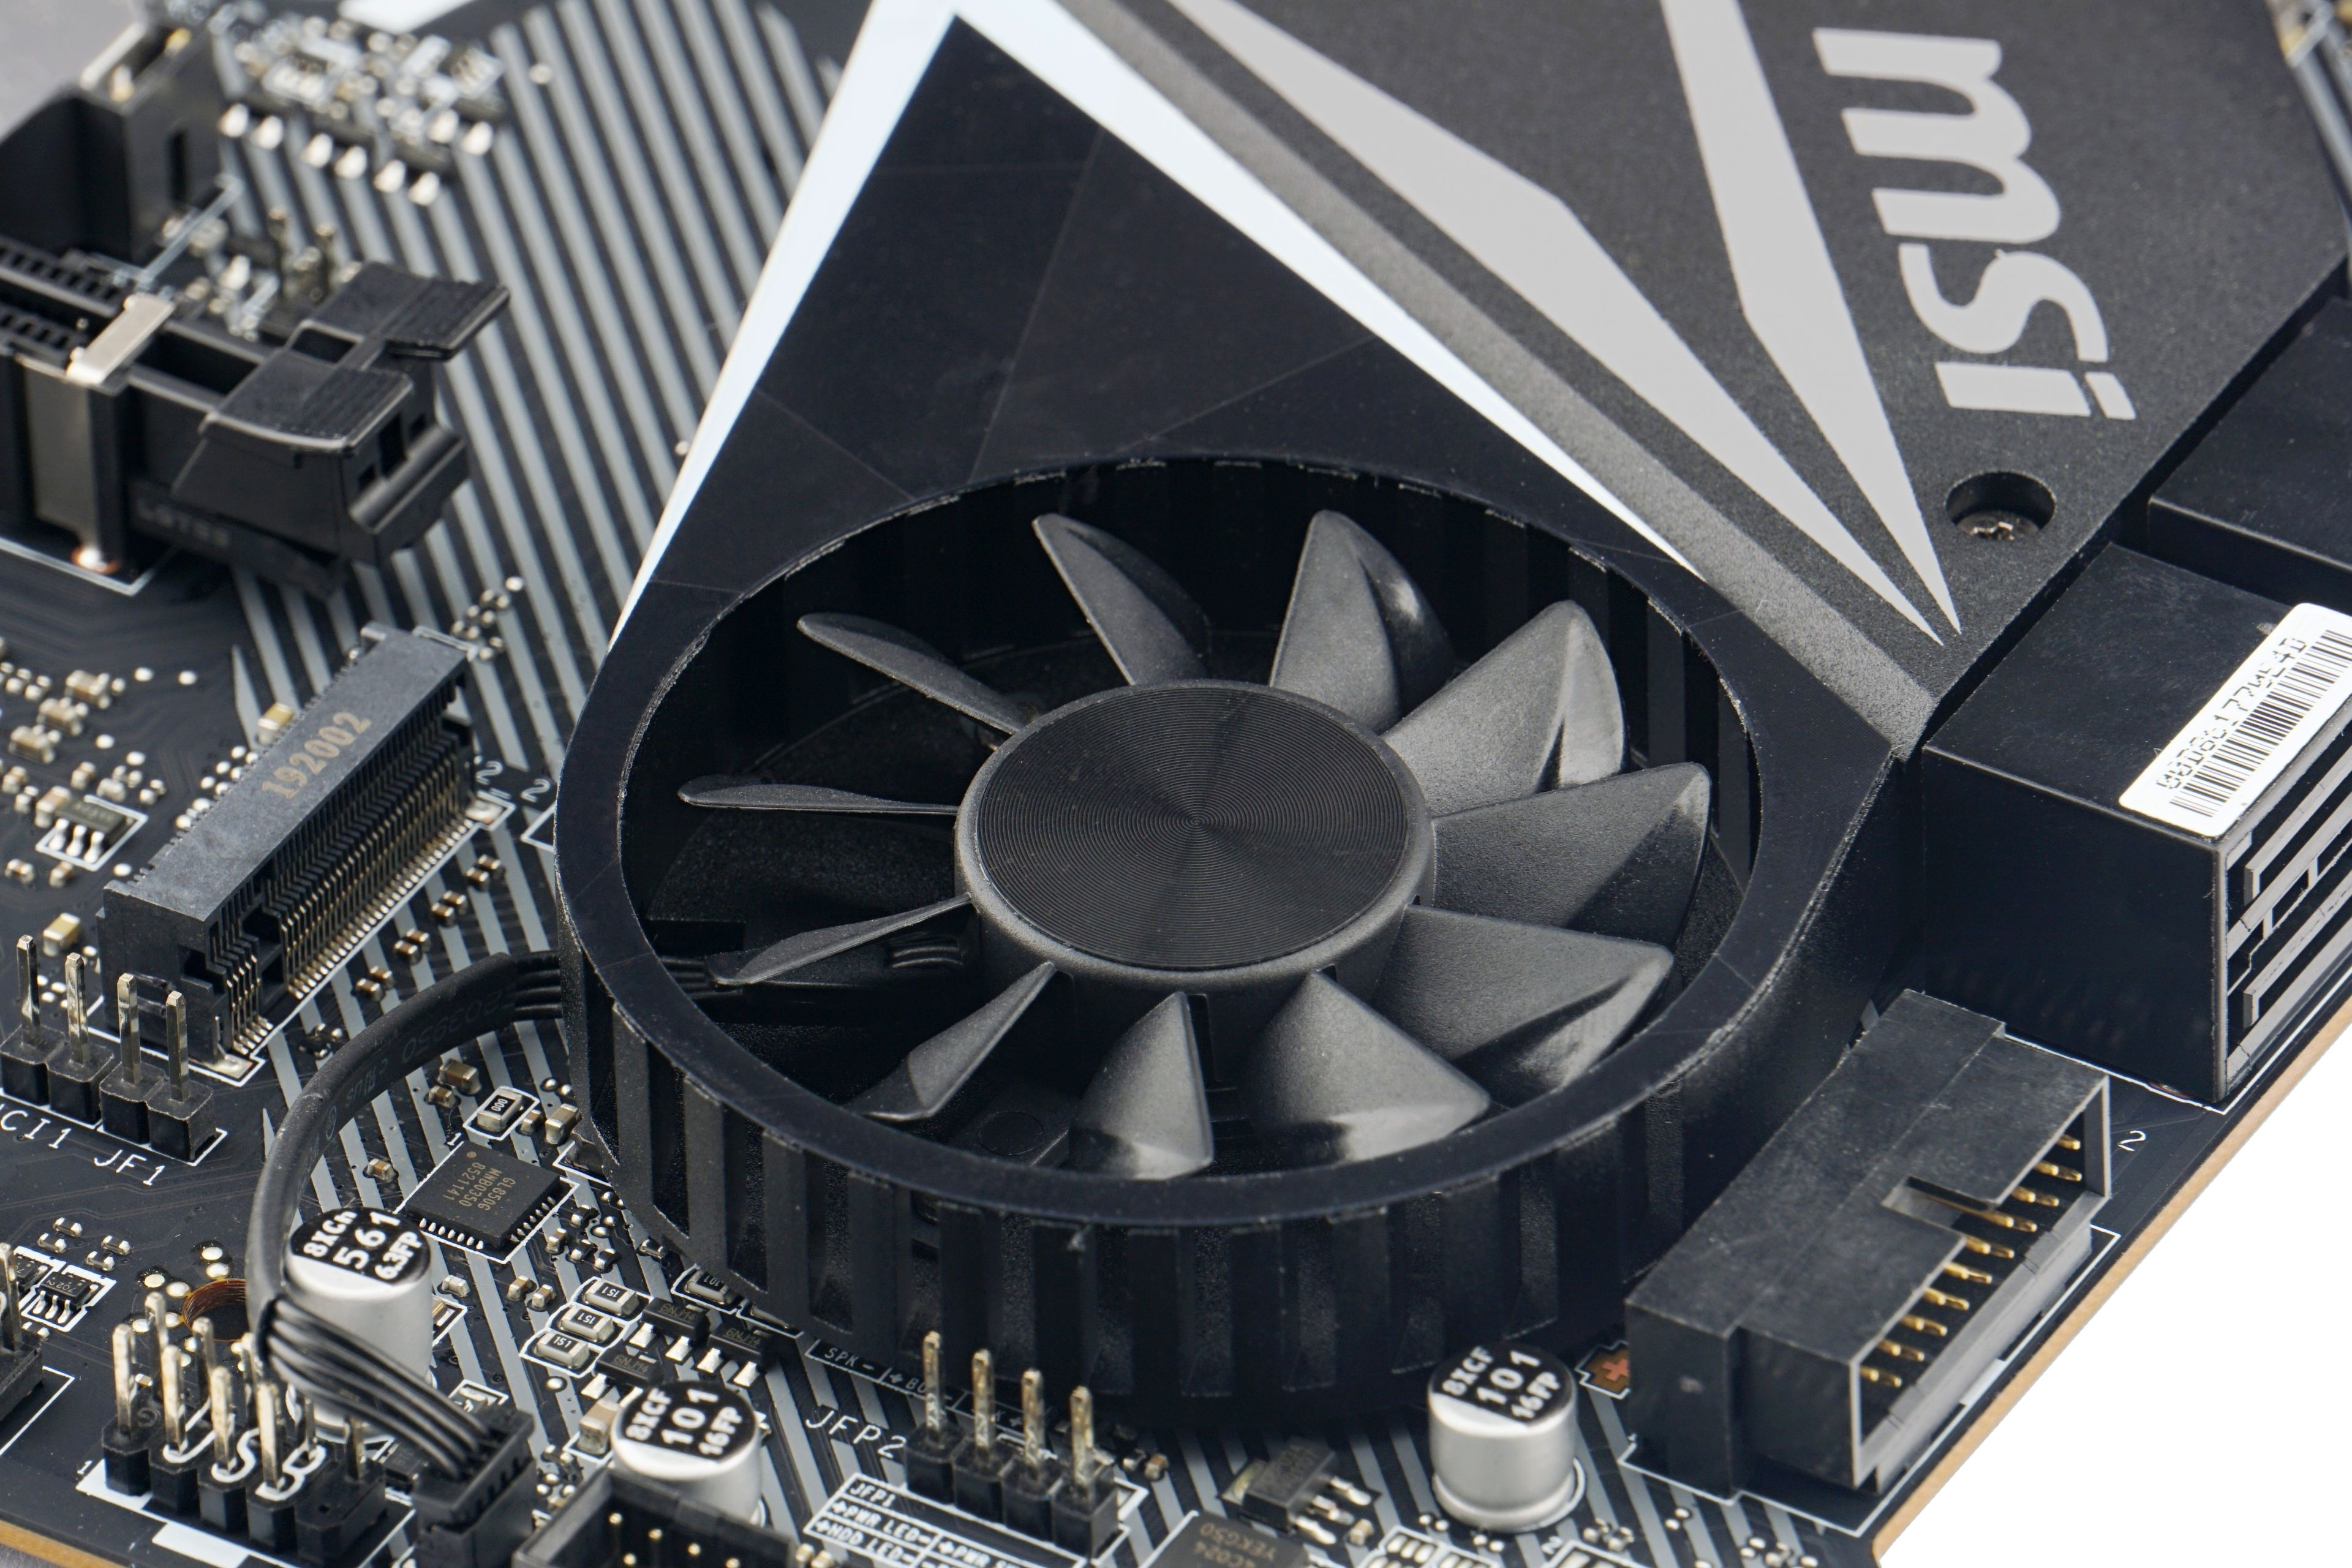 AMD X570 cooler: Will 4 beat VRAM - HWCooling.net